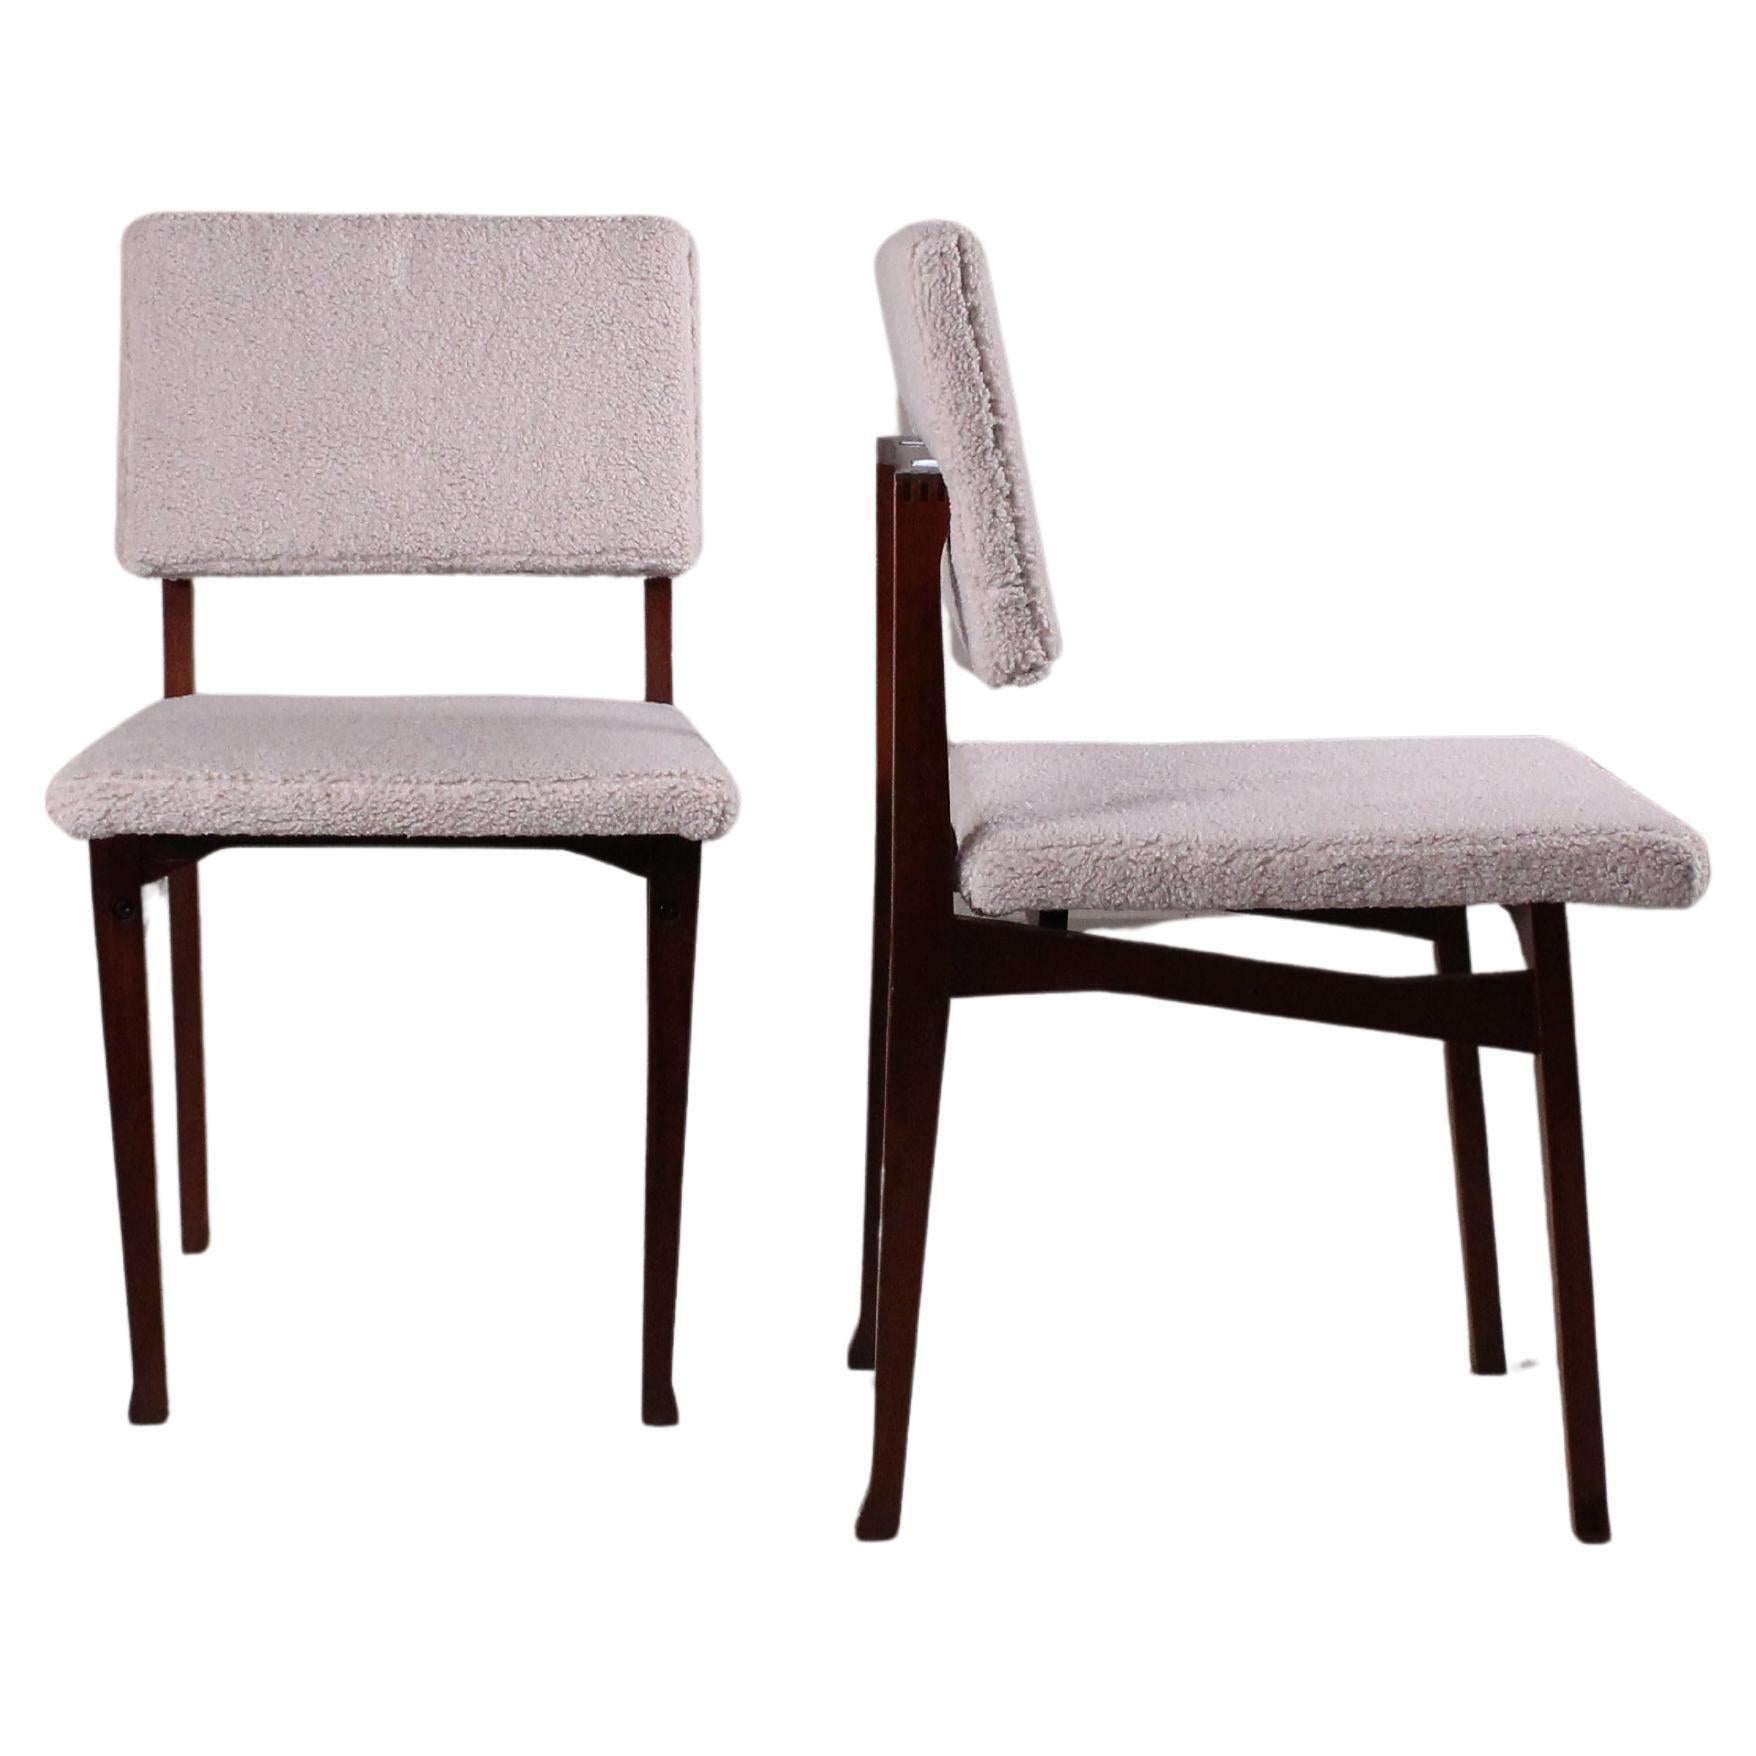 Set of 2 Luisella chair, Franco Albini, 1950 circa